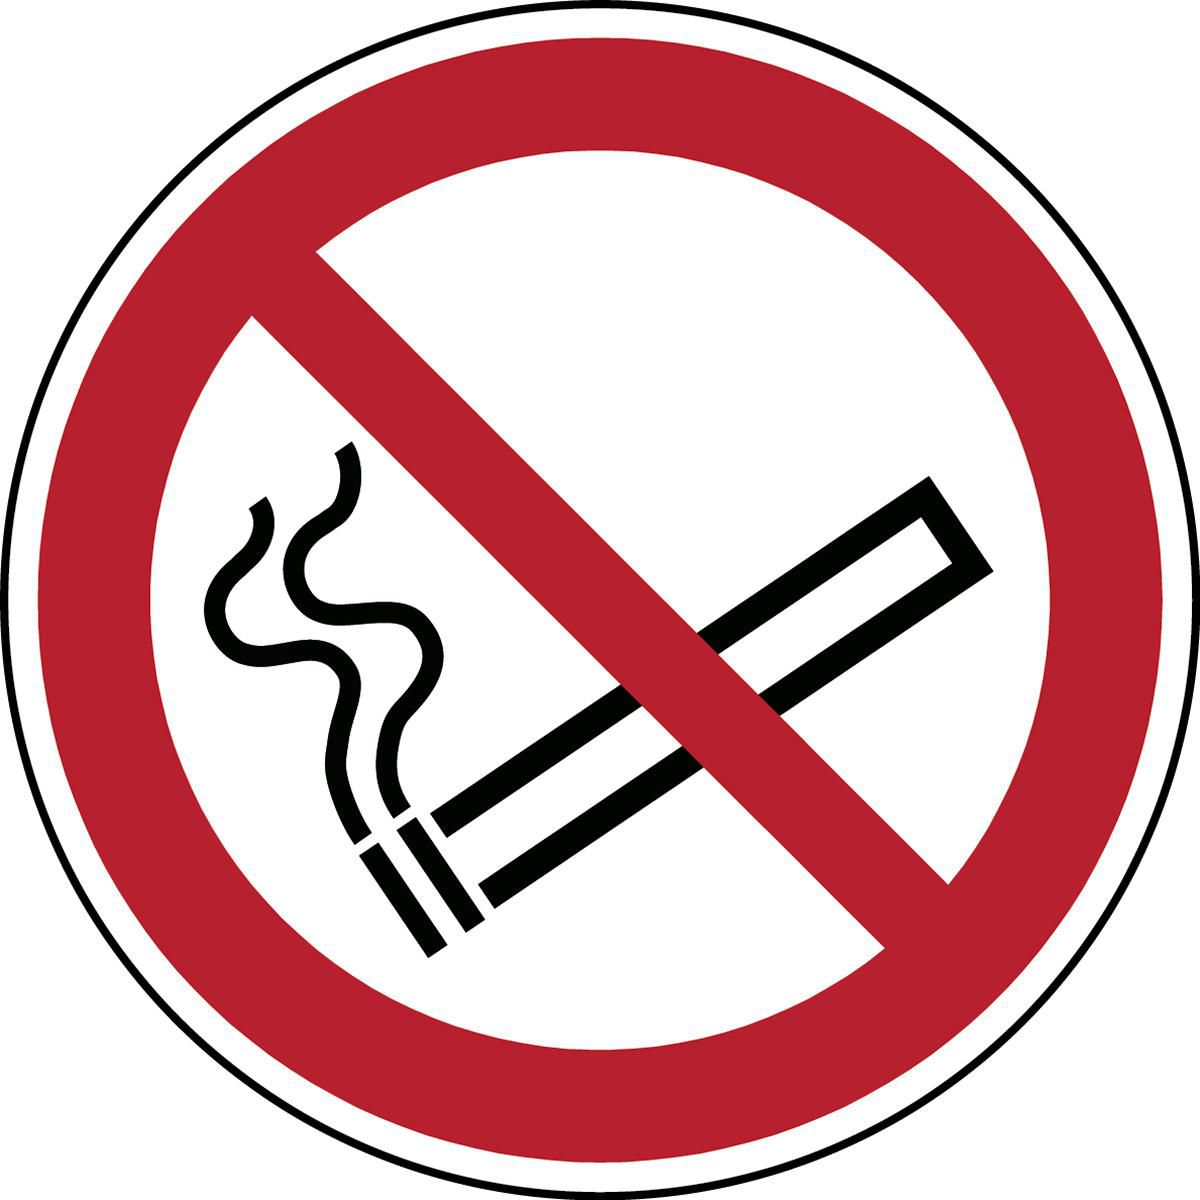 Brady PIC P002-DIA 100-AL-CRD1 W128402350 ISO Safety Sign - No smoking 